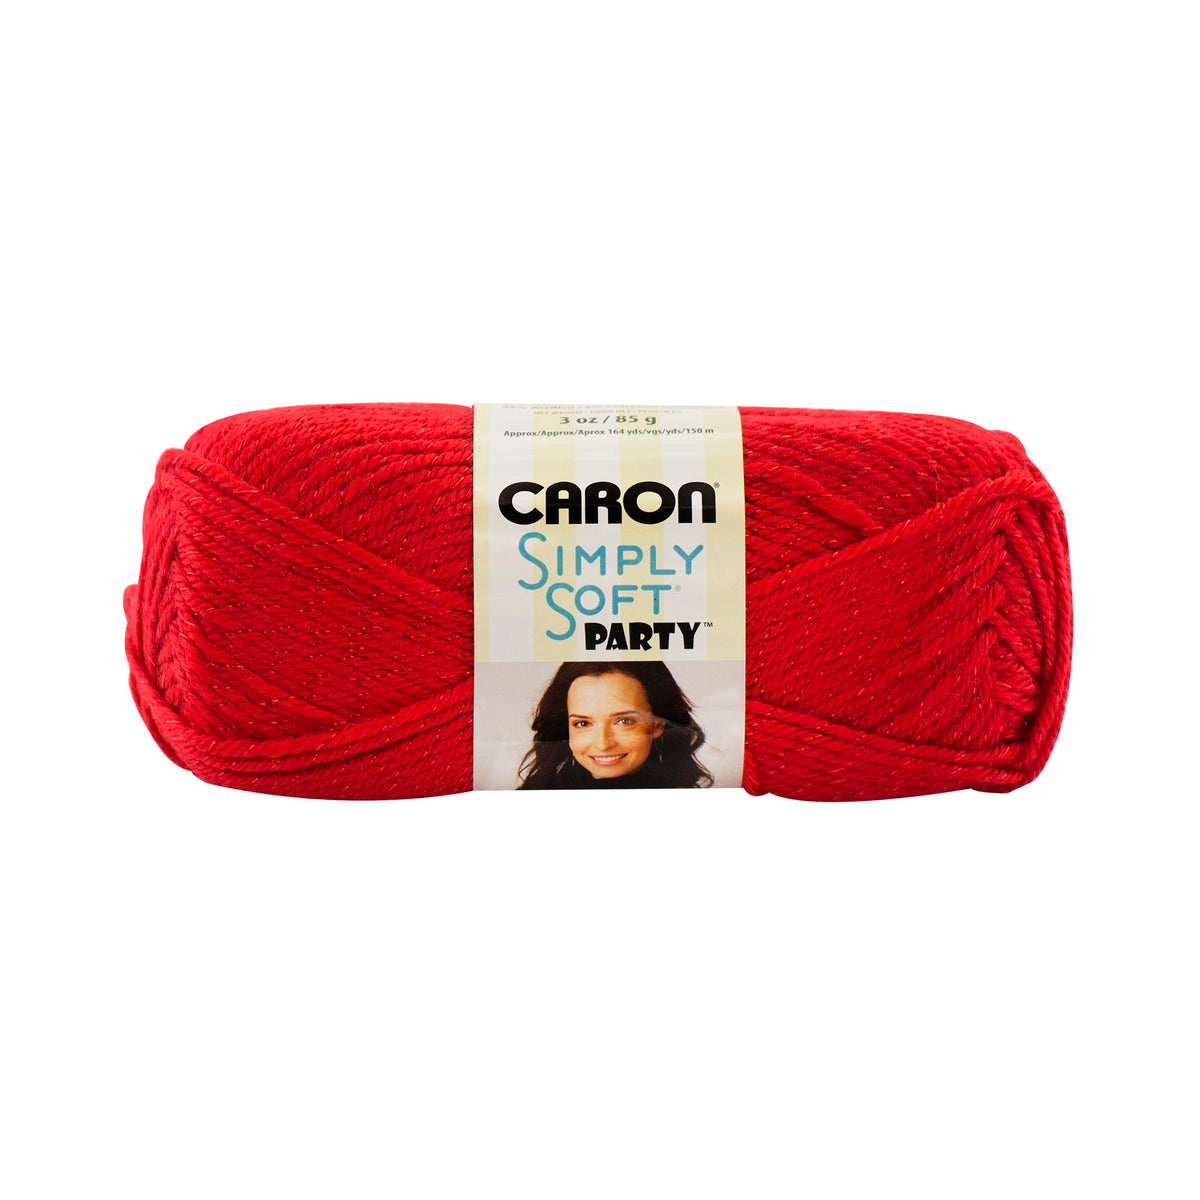 Caron Simply Soft - All Colours - Wool Warehouse - Buy Yarn, Wool